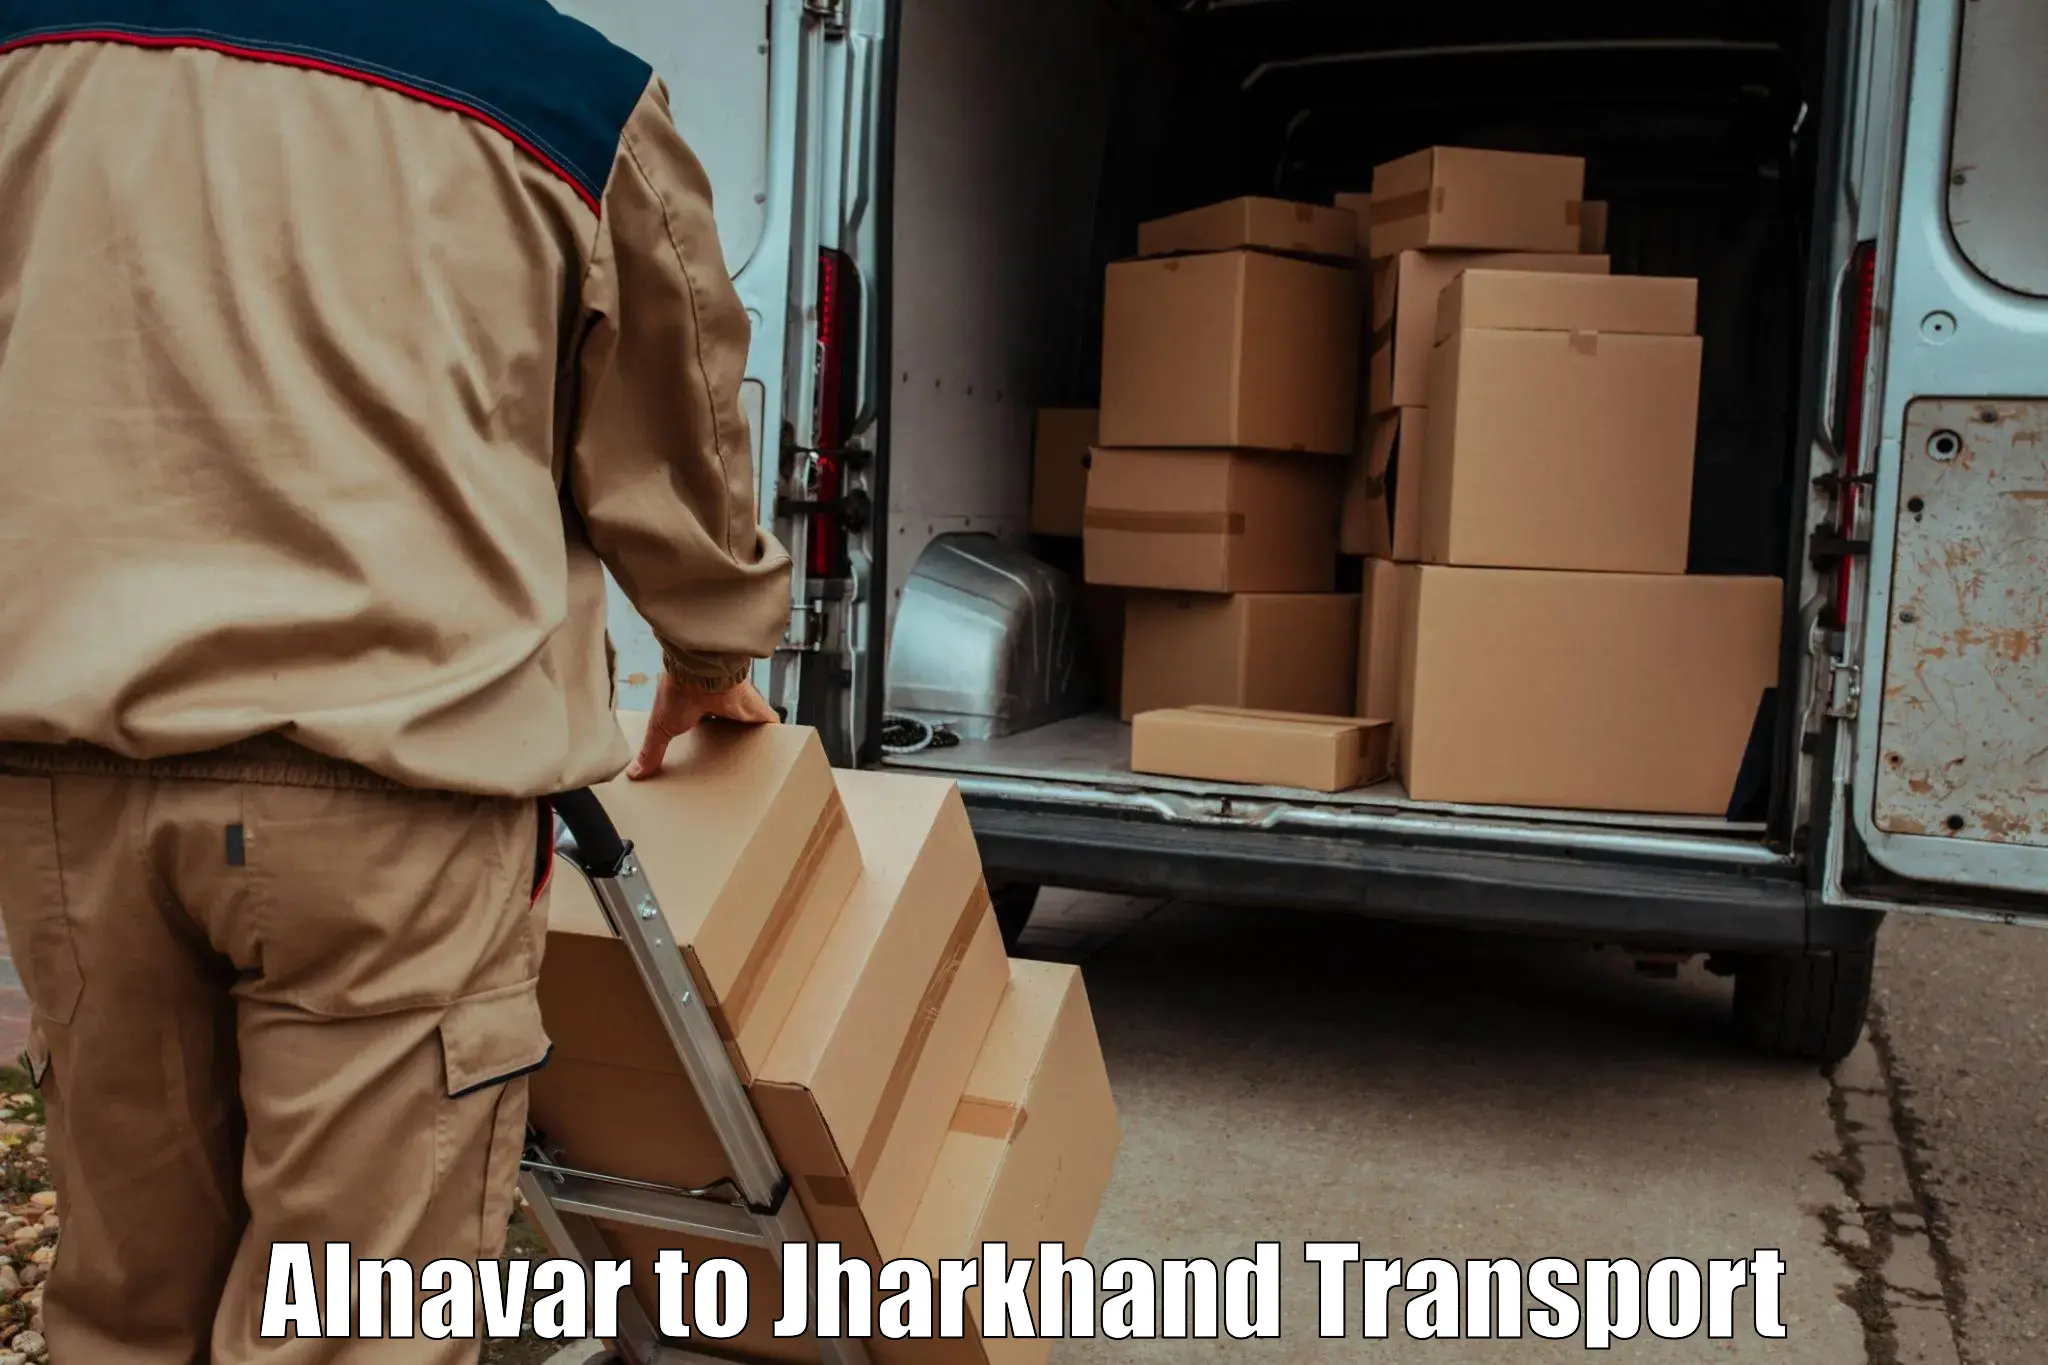 Parcel transport services Alnavar to Chakradharpur